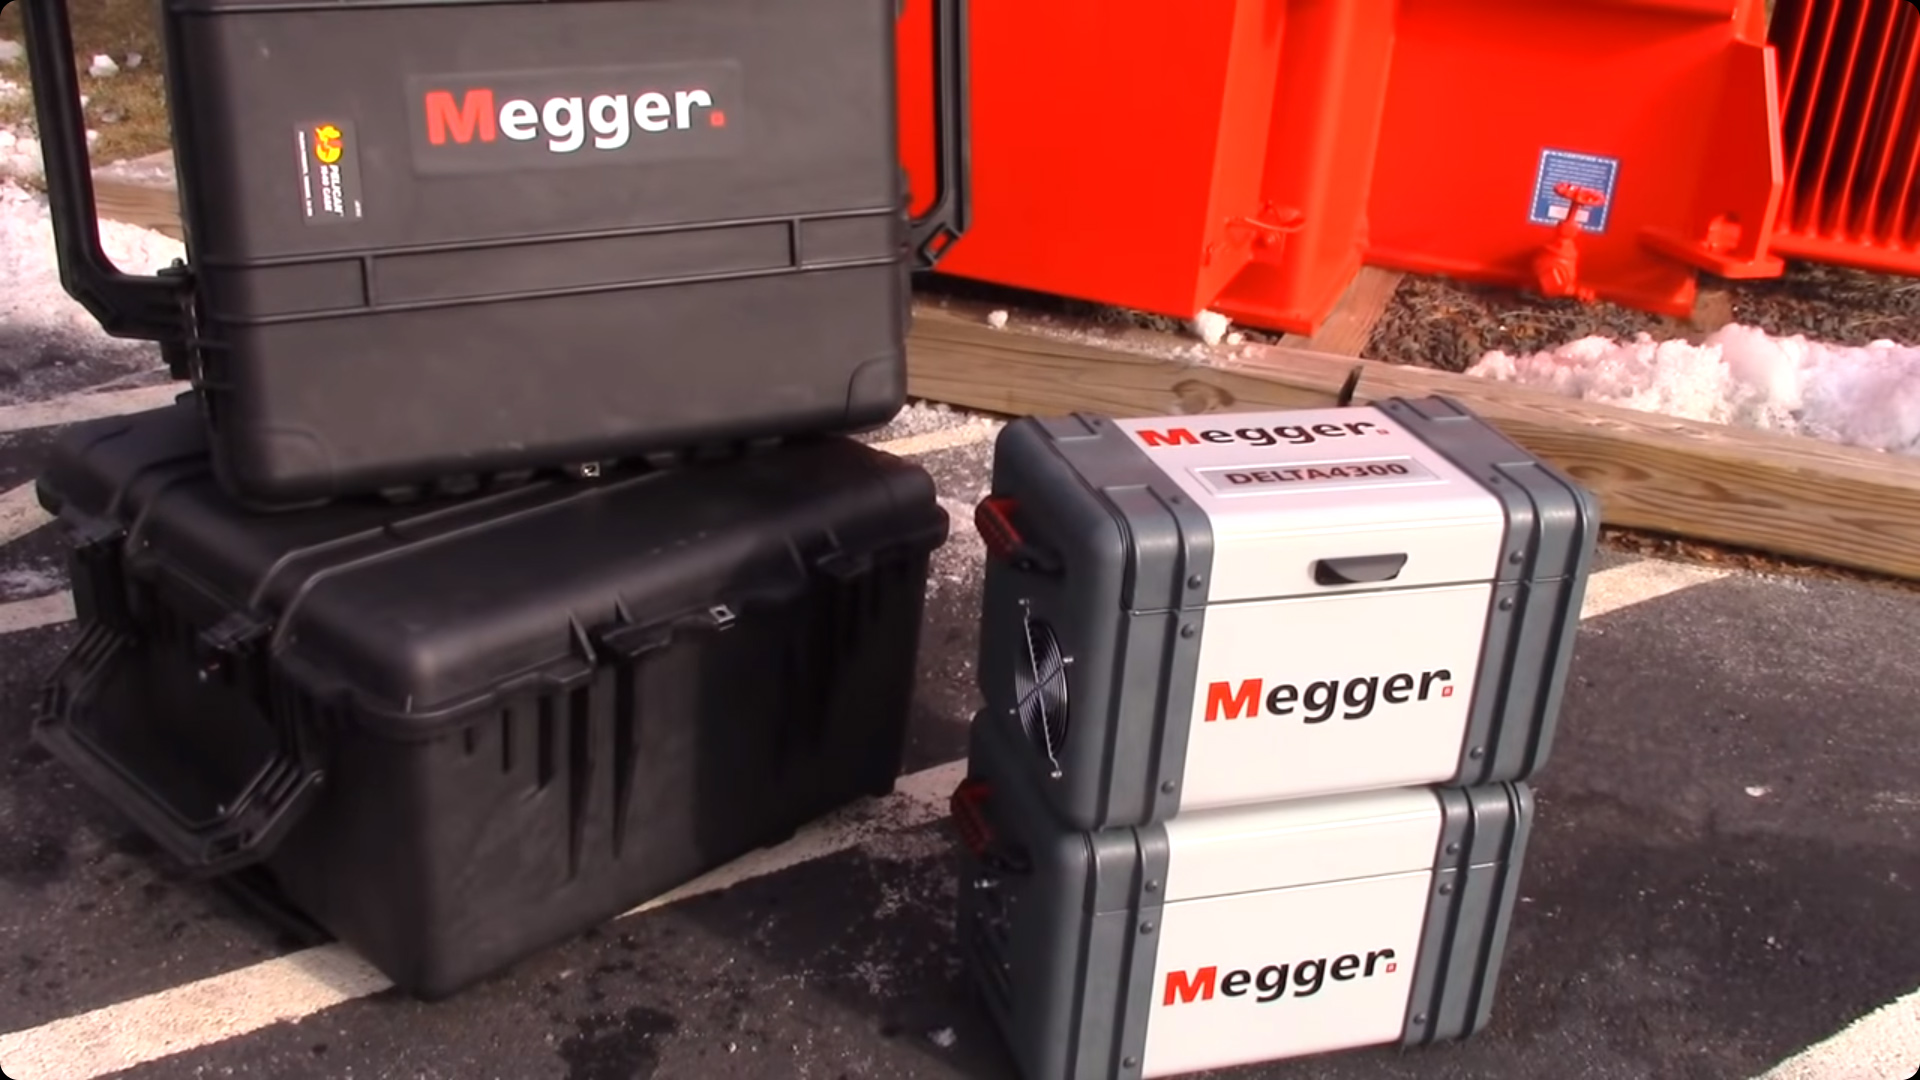 Megger DELTA4000 Series 12 kV Insulation Diagnostic System placed in the megger car park.